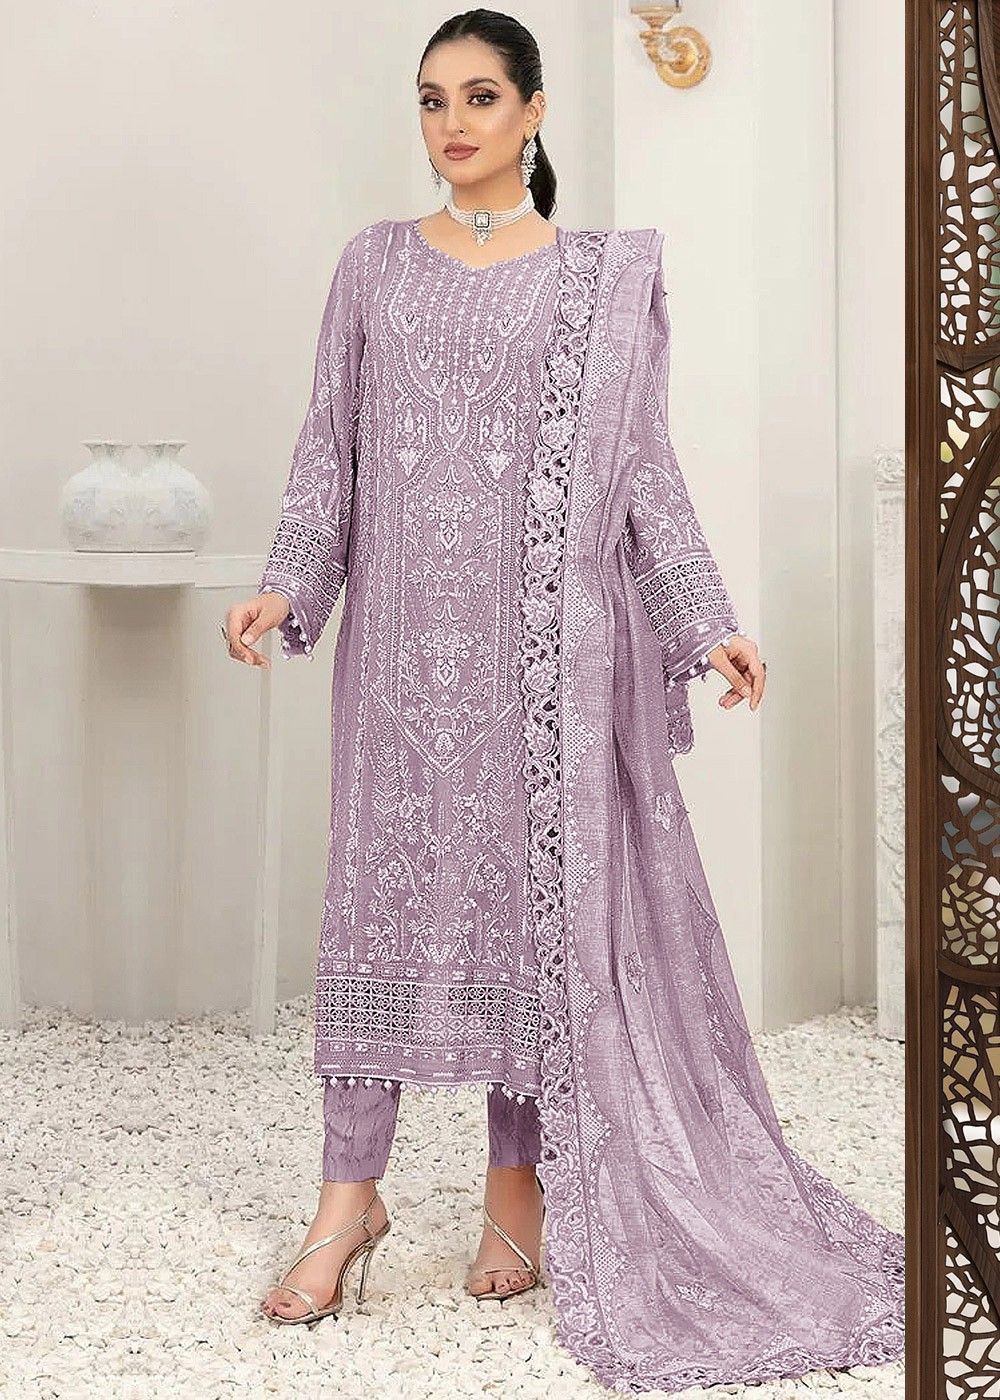 Wedding Wear Readymade Indian Women's Salwar Kameez Dresses Pakistani Pant  Suits | eBay